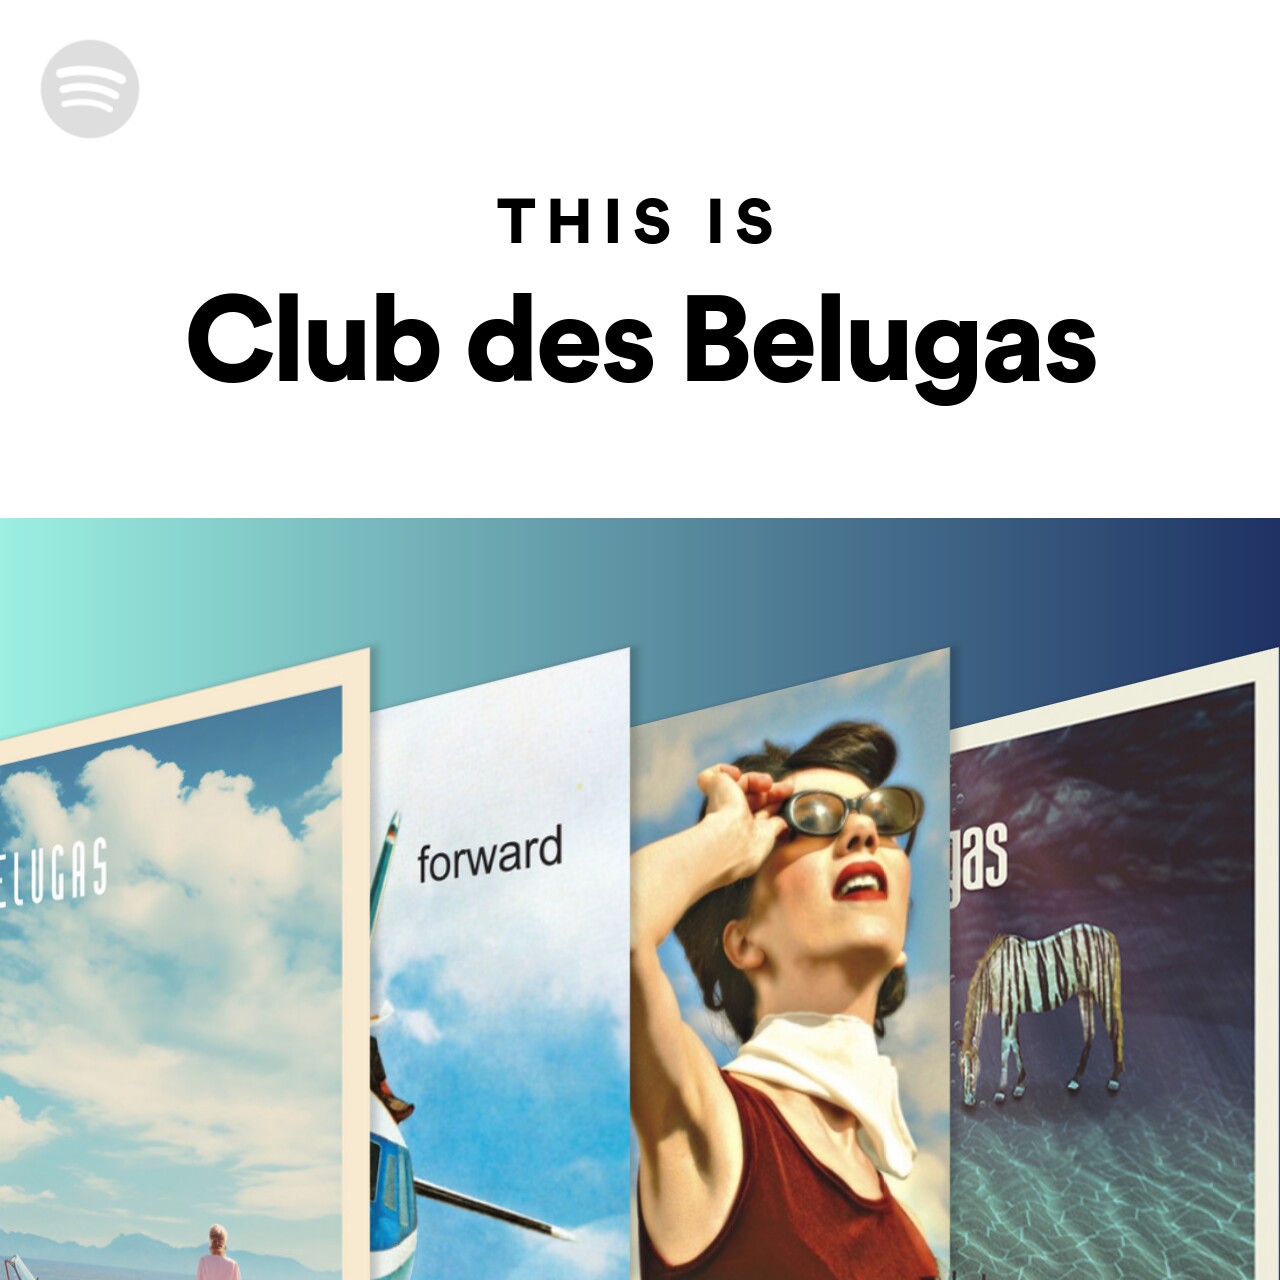 This Is Club des Belugas